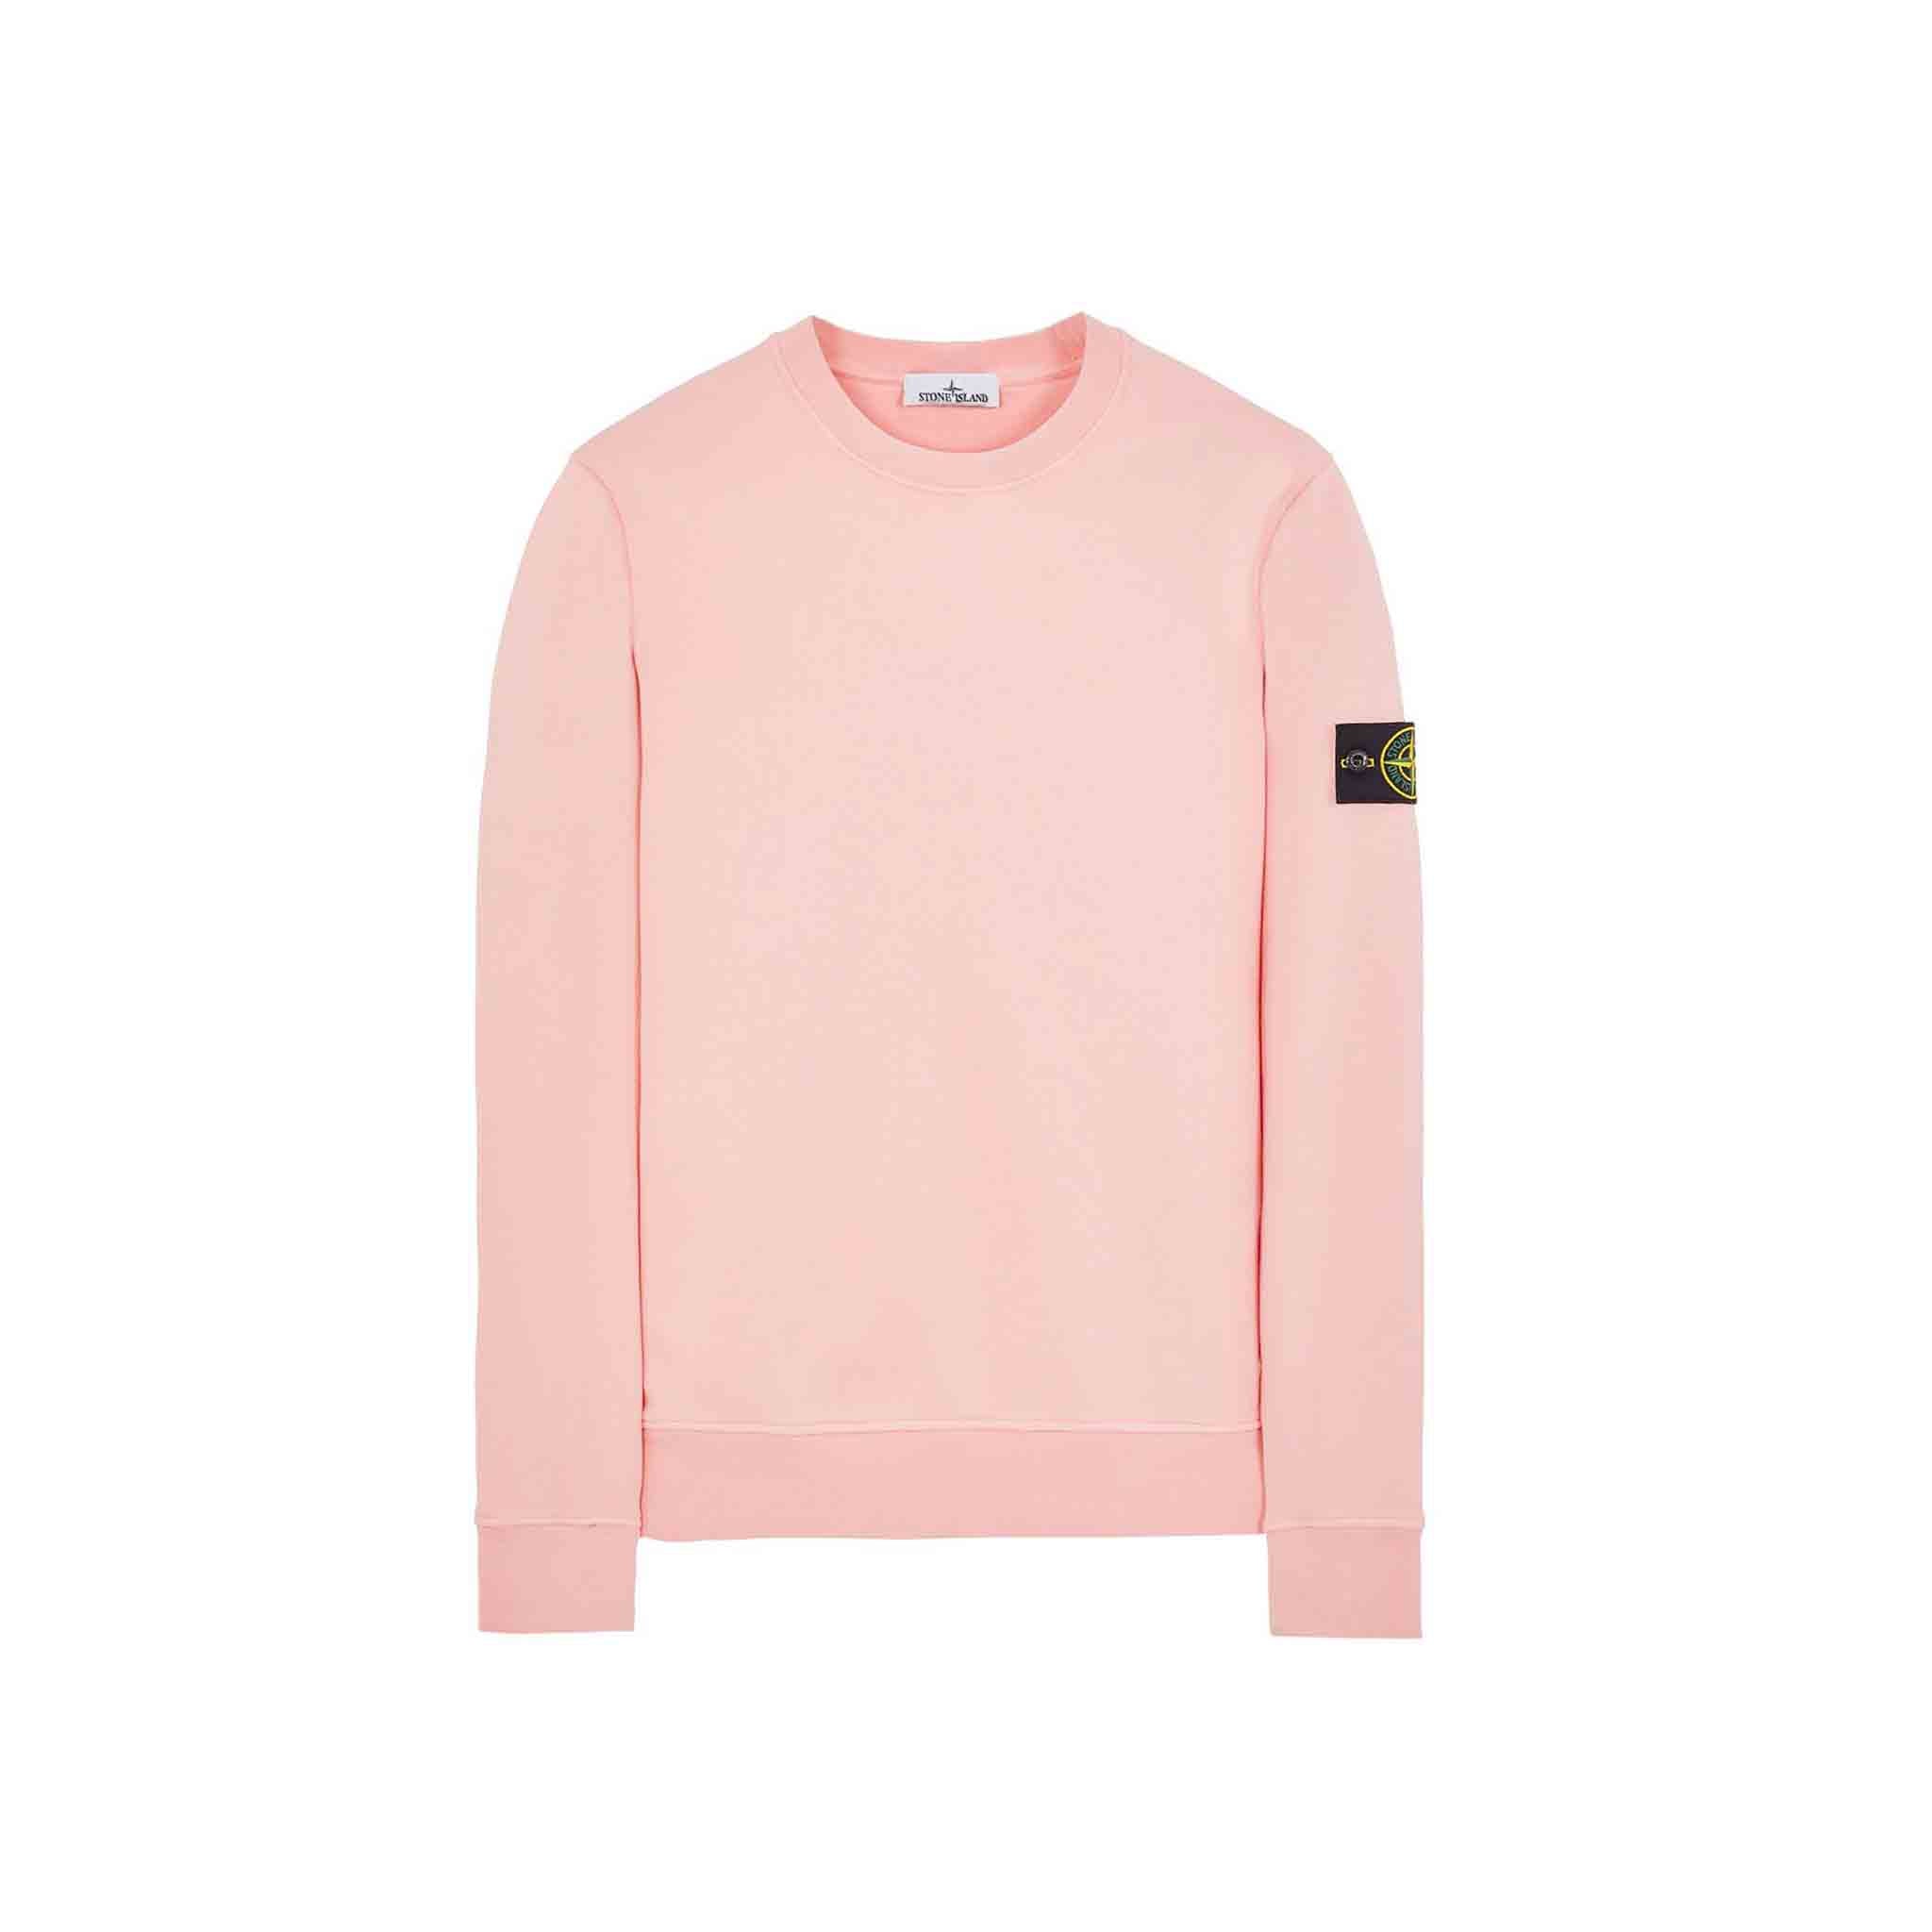 Stone Island Crewneck Sweatshirt in Pink